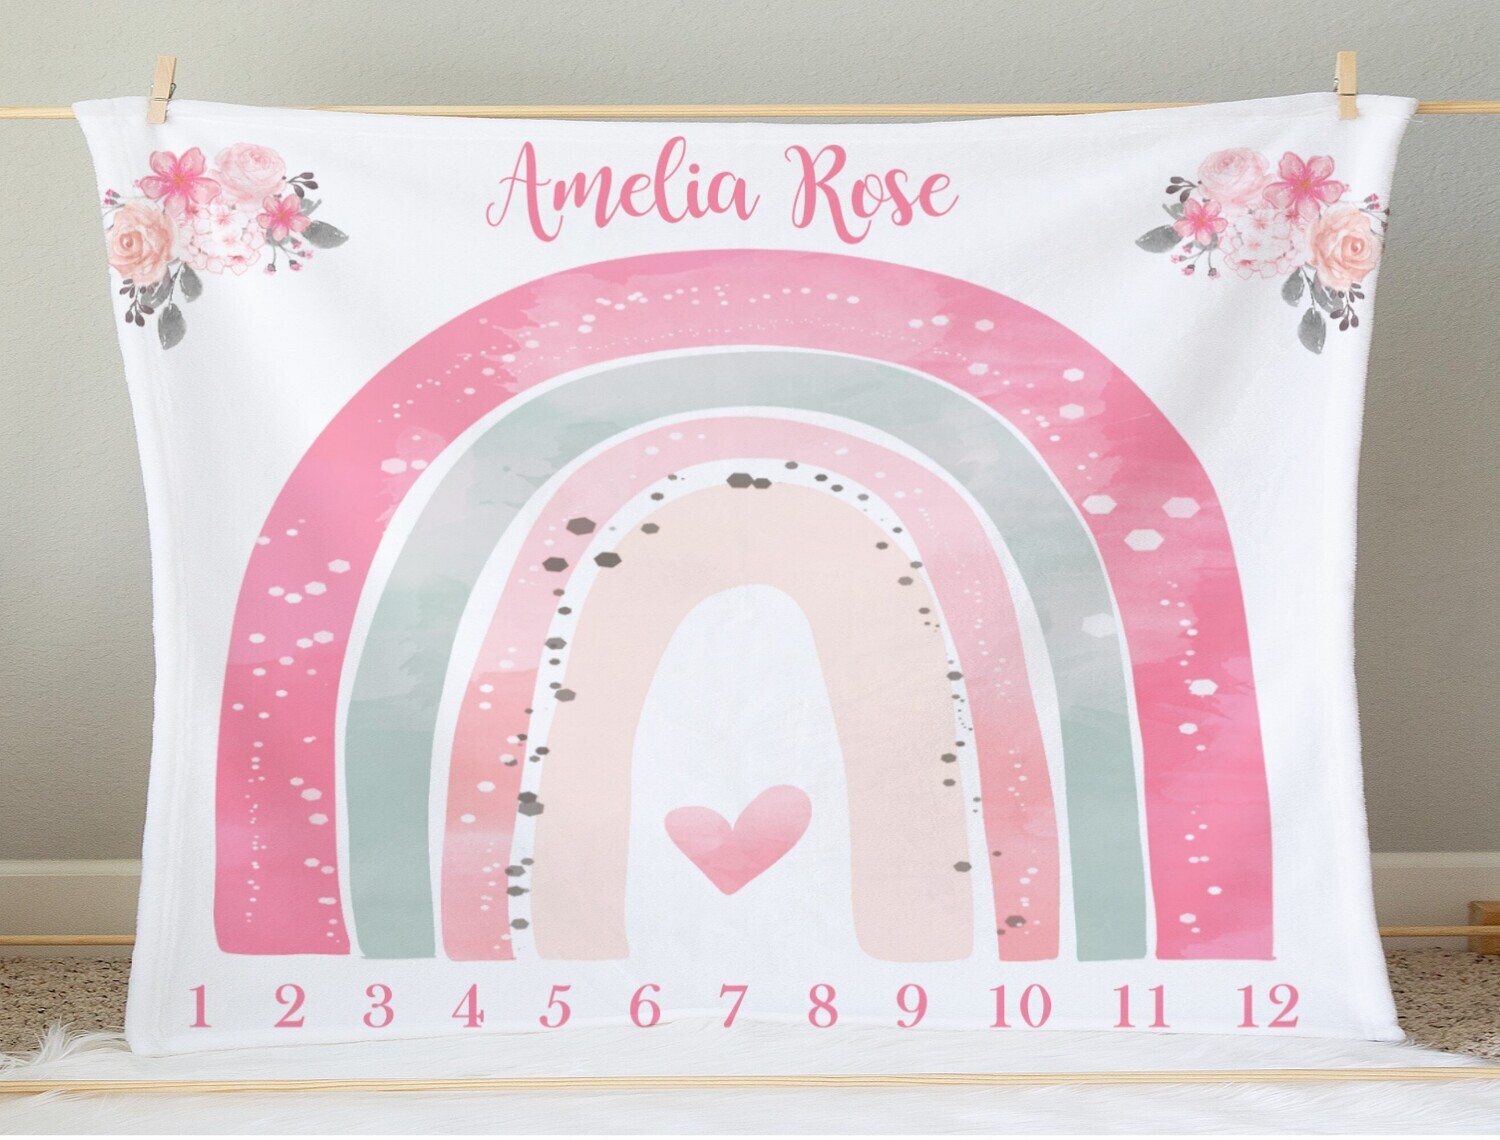 Boho Rainbow Baby Blanket, Personalized Milestone Blanket, Monthly Milestone Blanket, Baby Shower Gift, Baby Girl Blanket, Nursery Decor